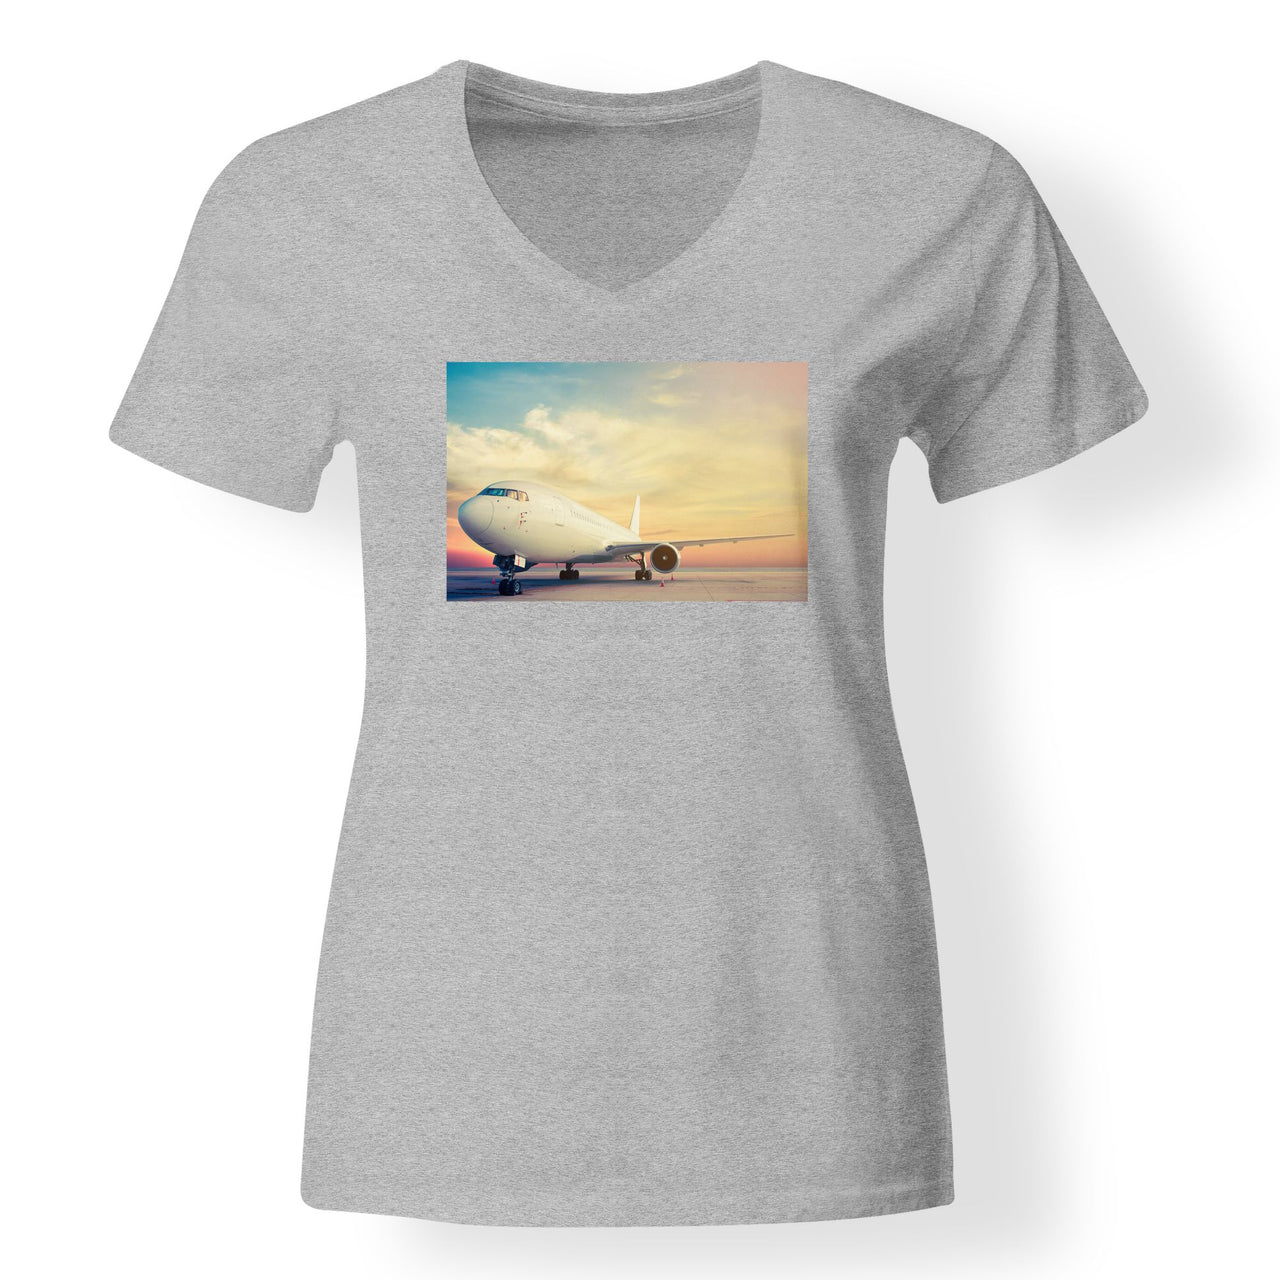 Parked Aircraft During Sunset Designed V-Neck T-Shirts